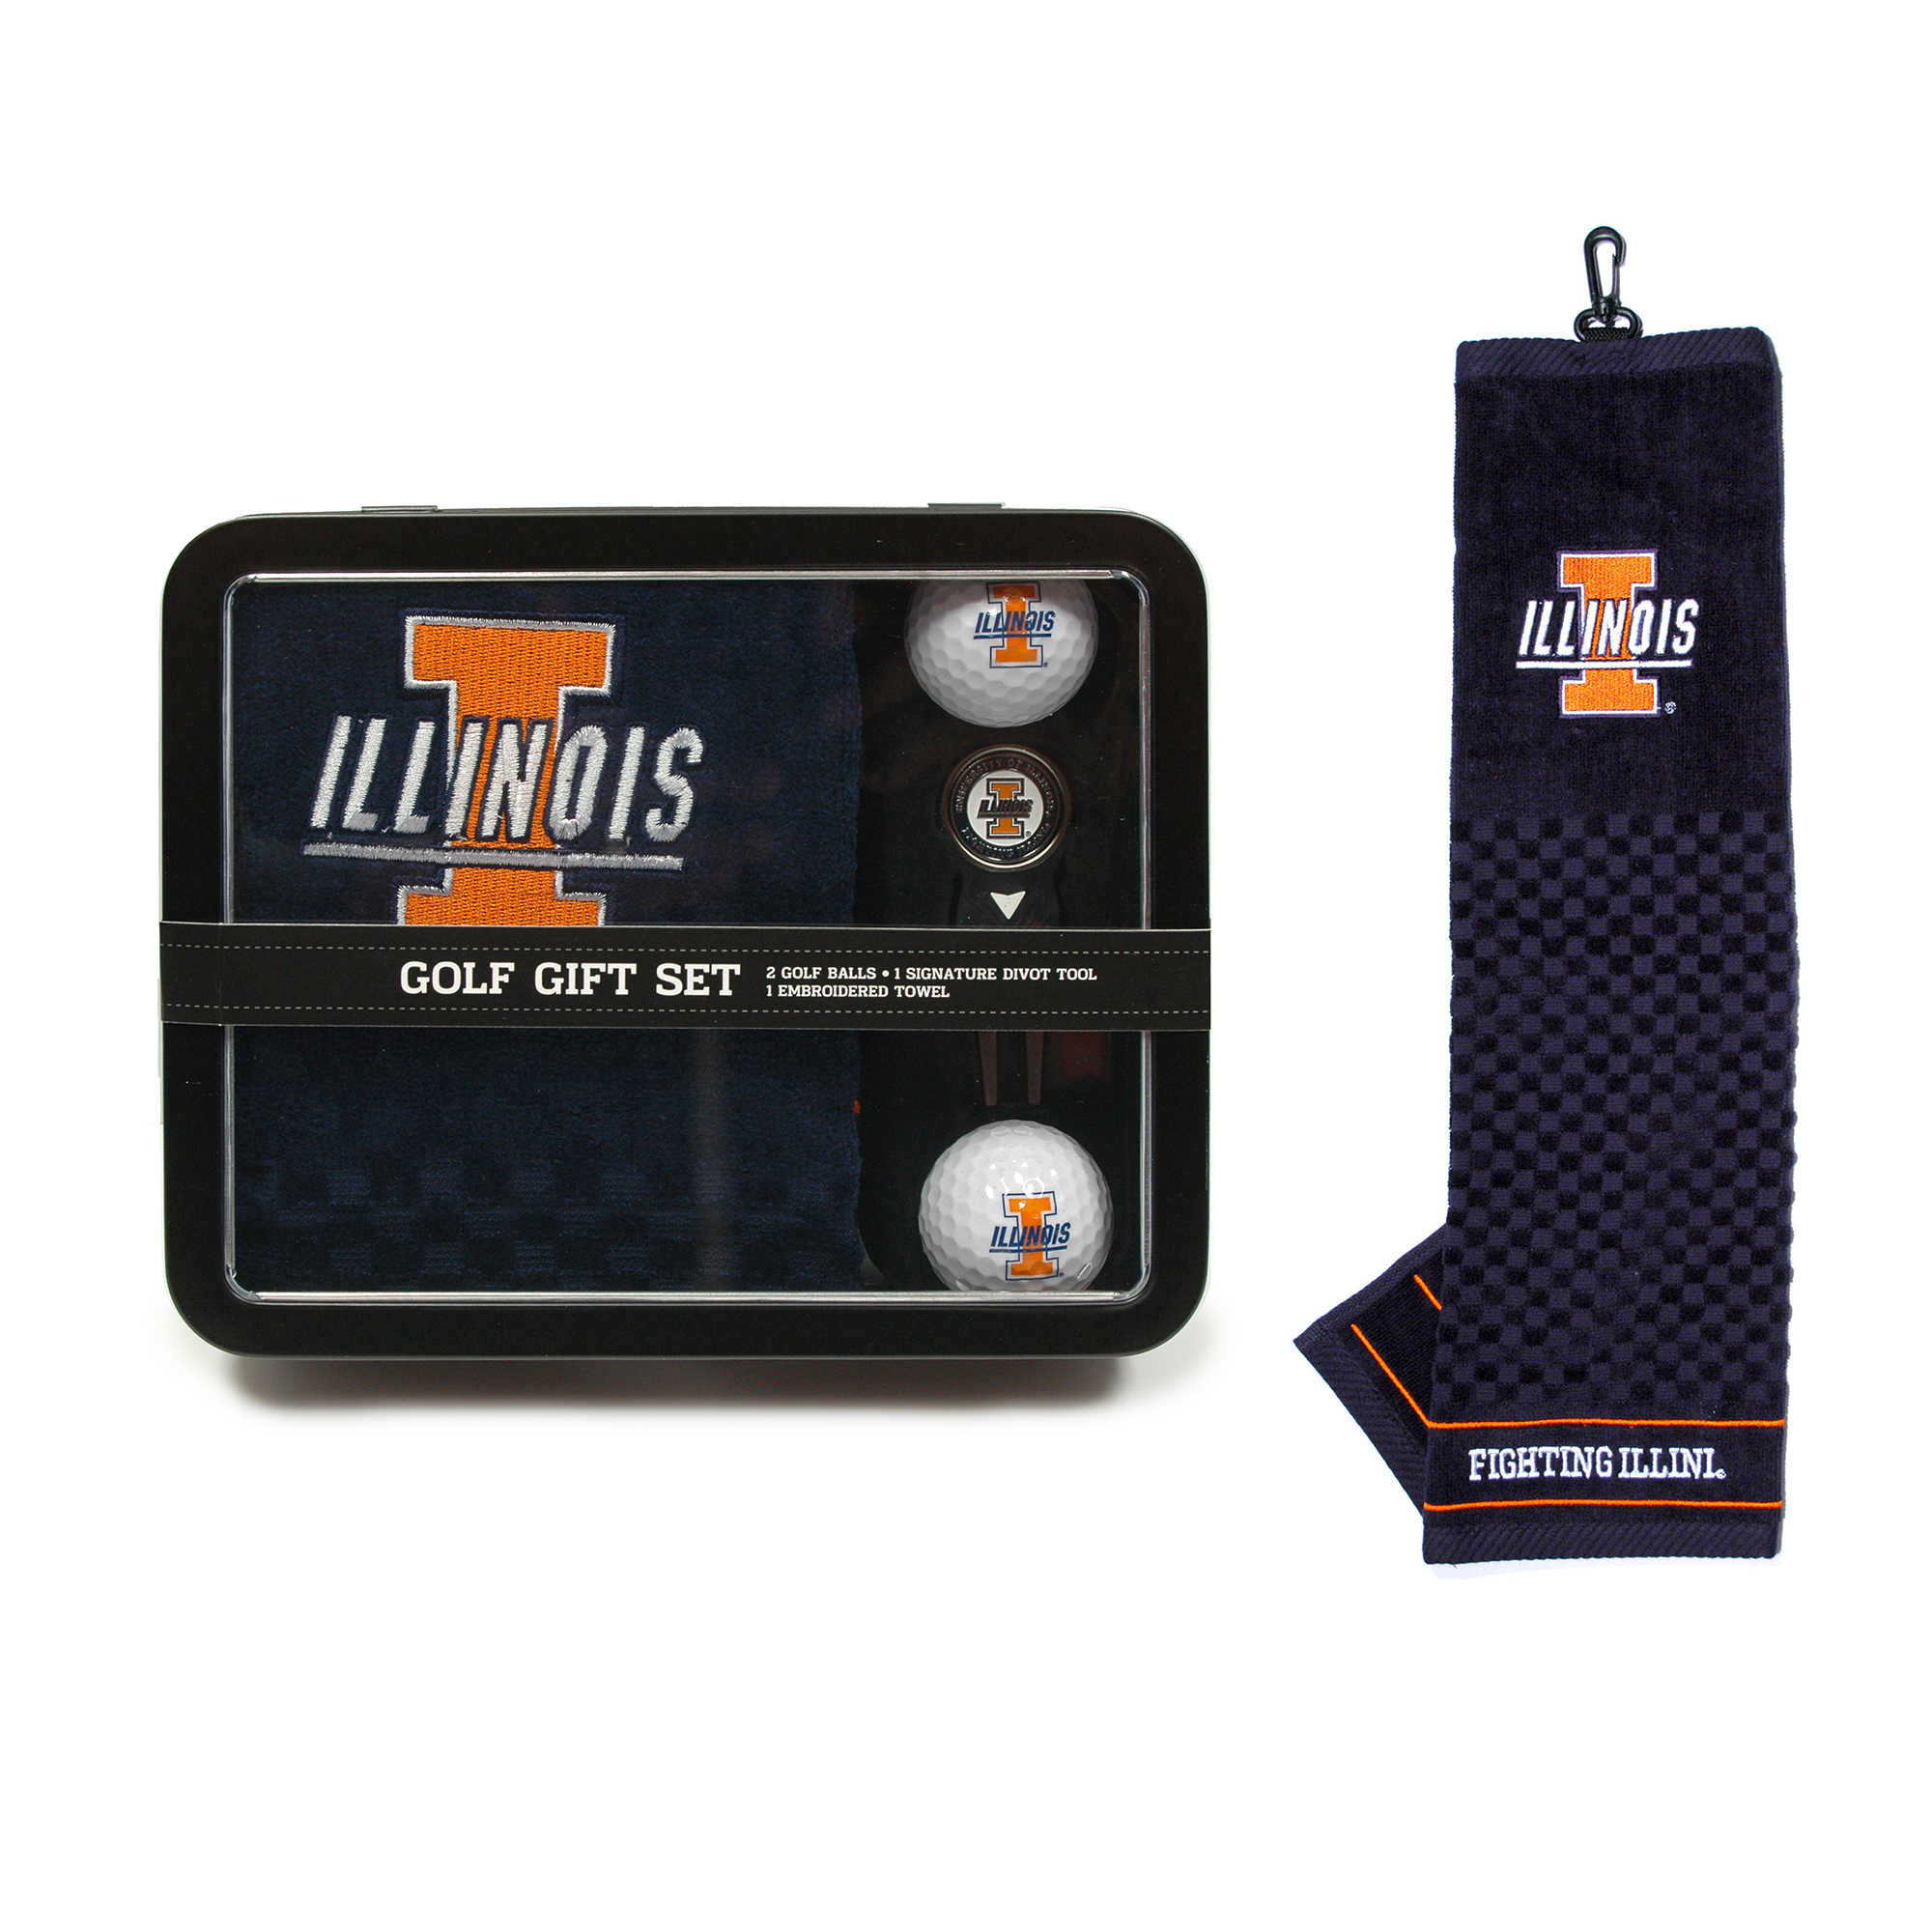 Illinois Embroidered Golf Towel, 2 balls and divot set